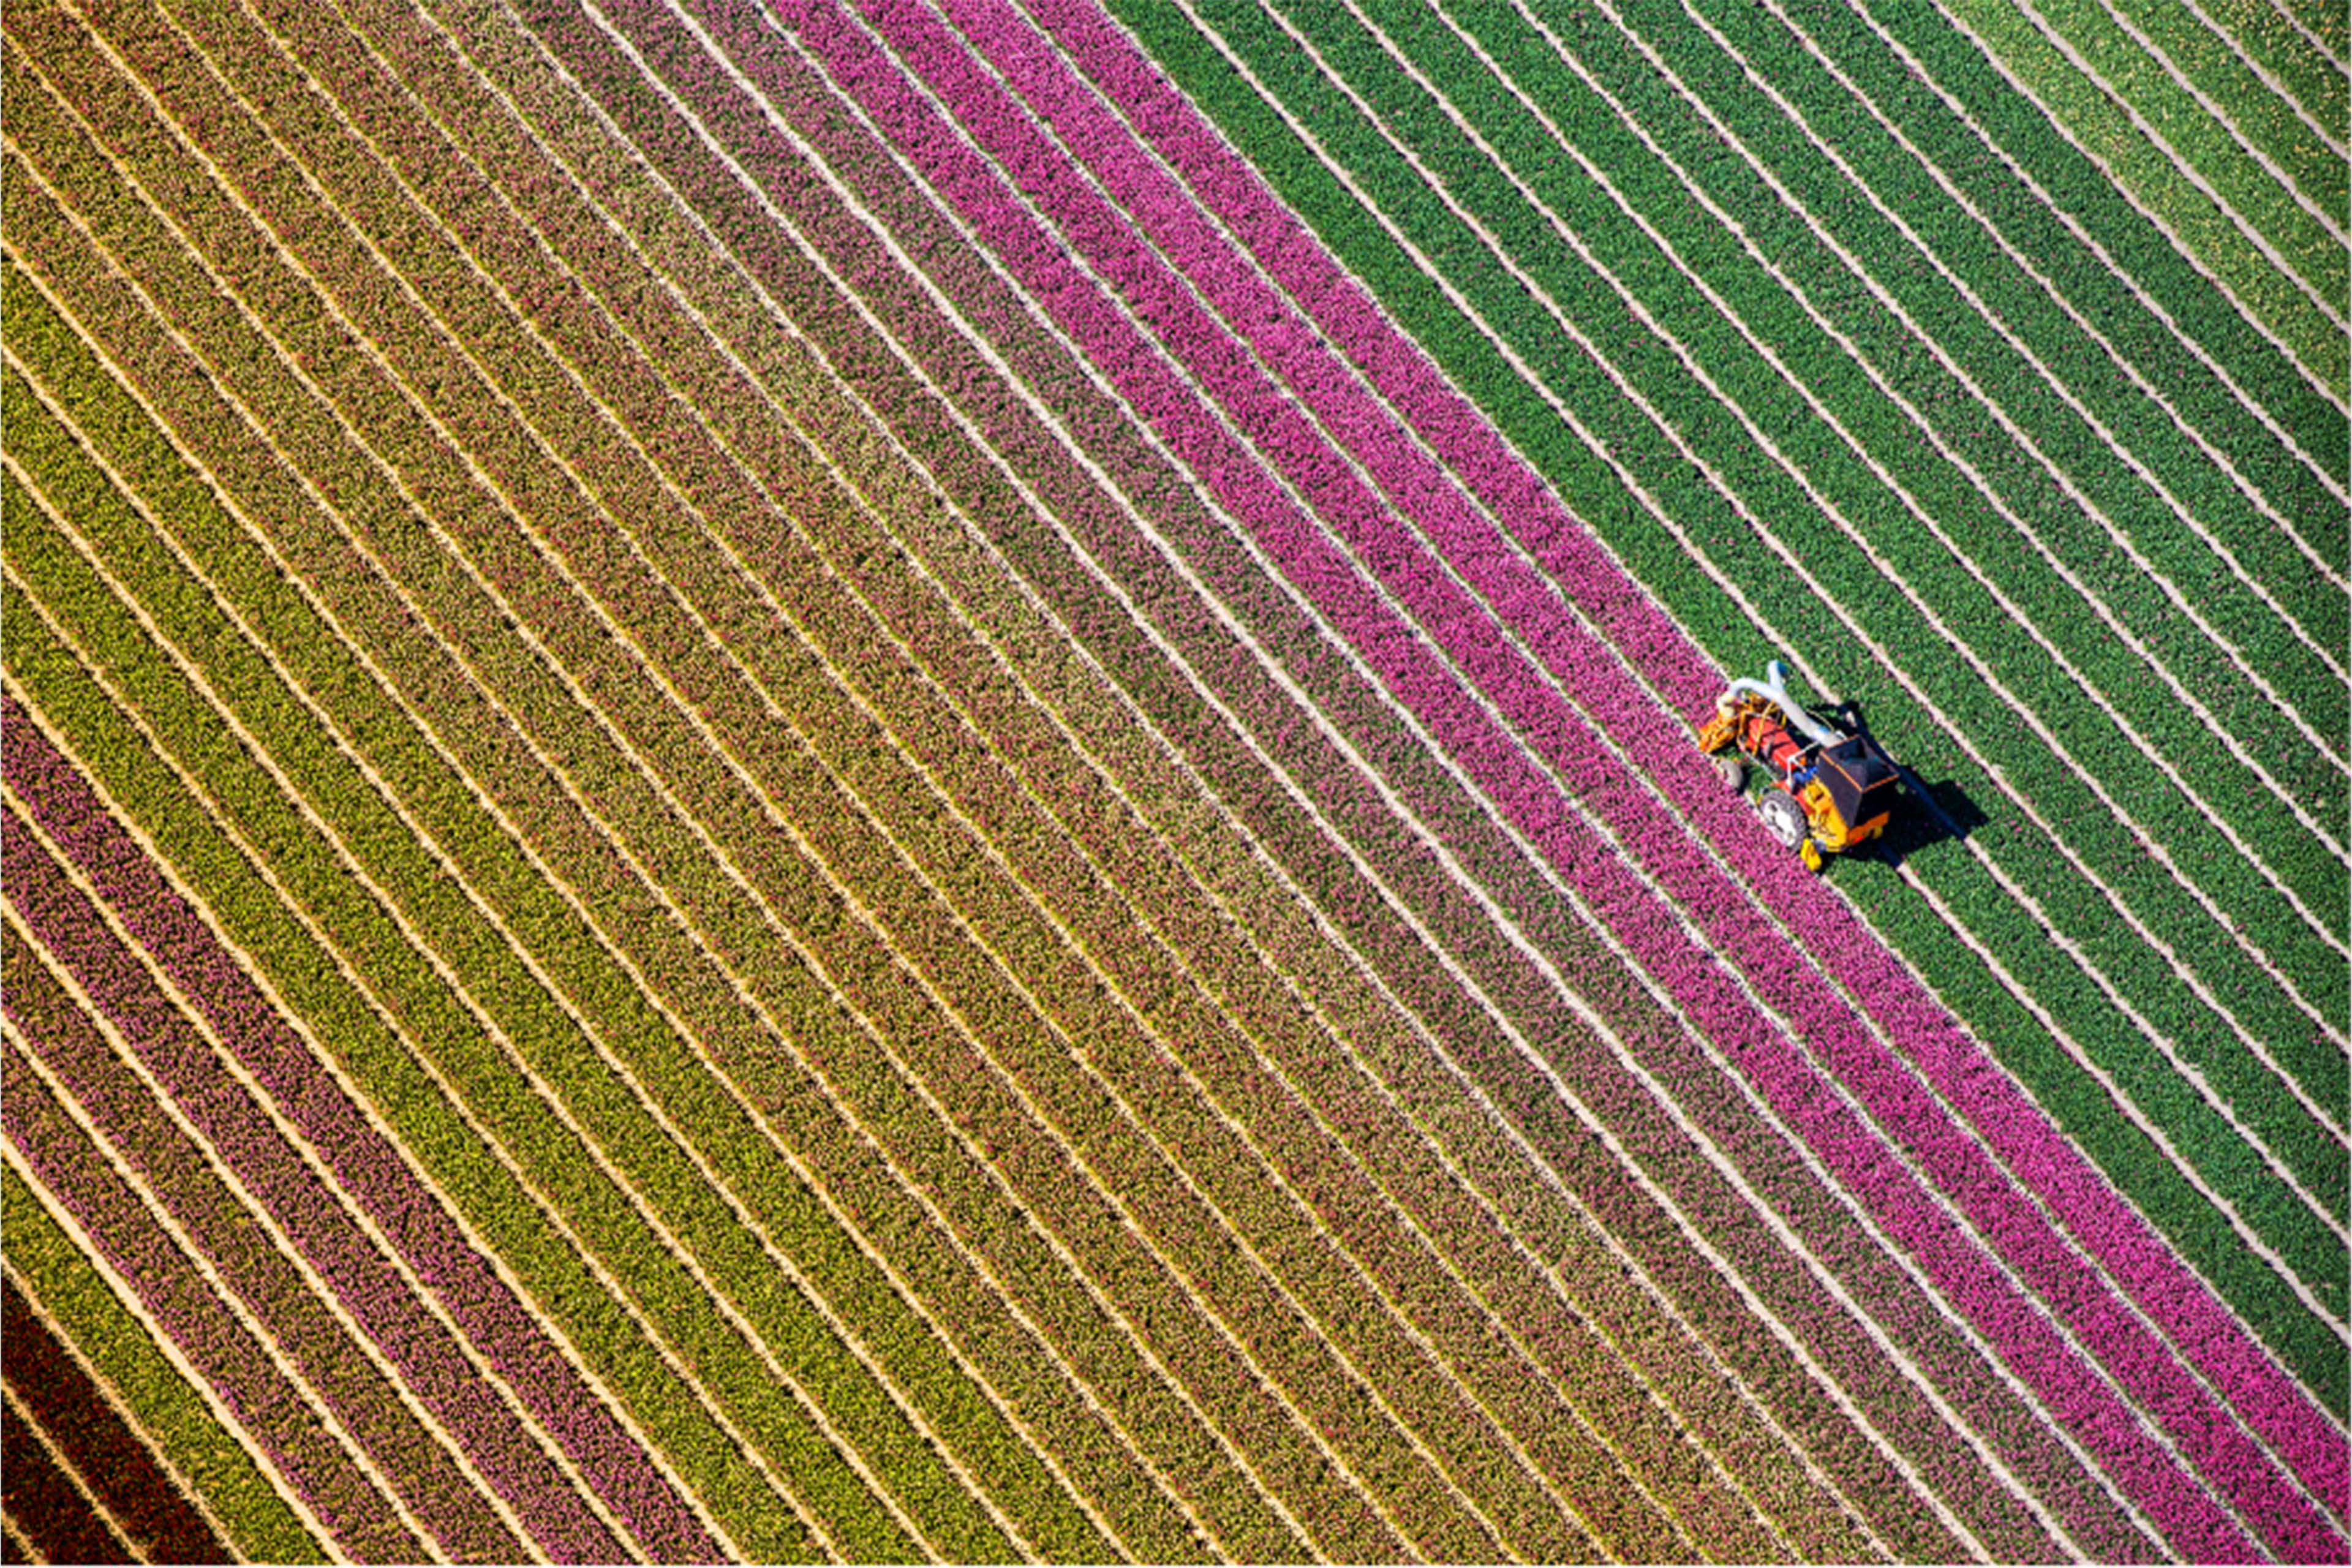 Tulip Fields Burgervlotbrug Netherlands